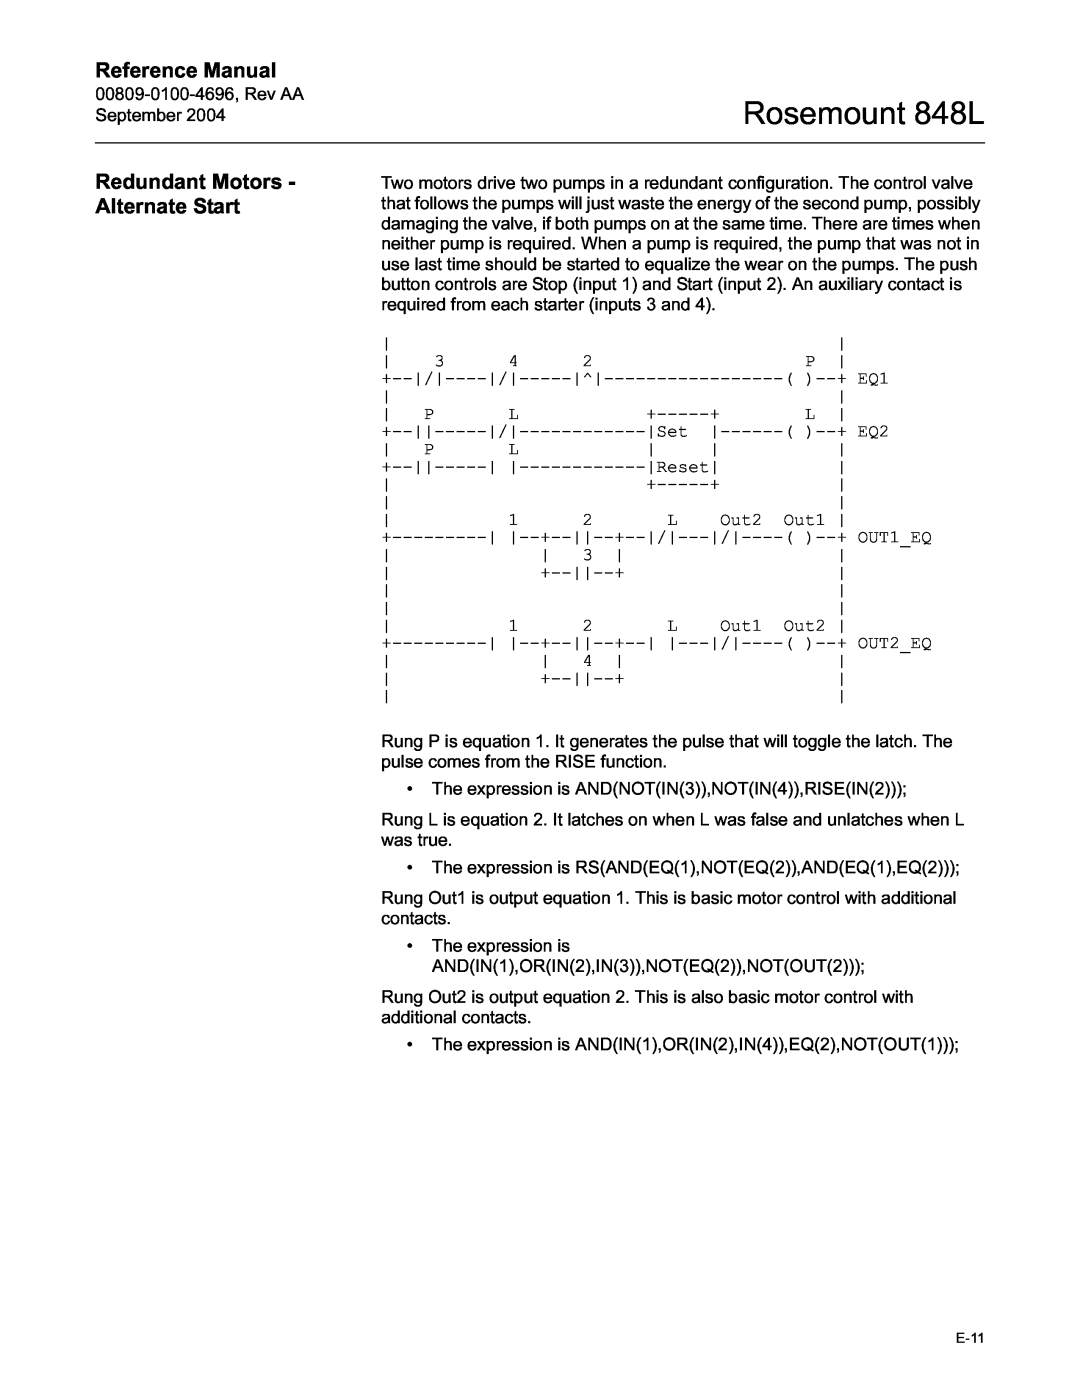 Emerson manual Redundant Motors - Alternate Start, Rosemount 848L, Reference Manual 